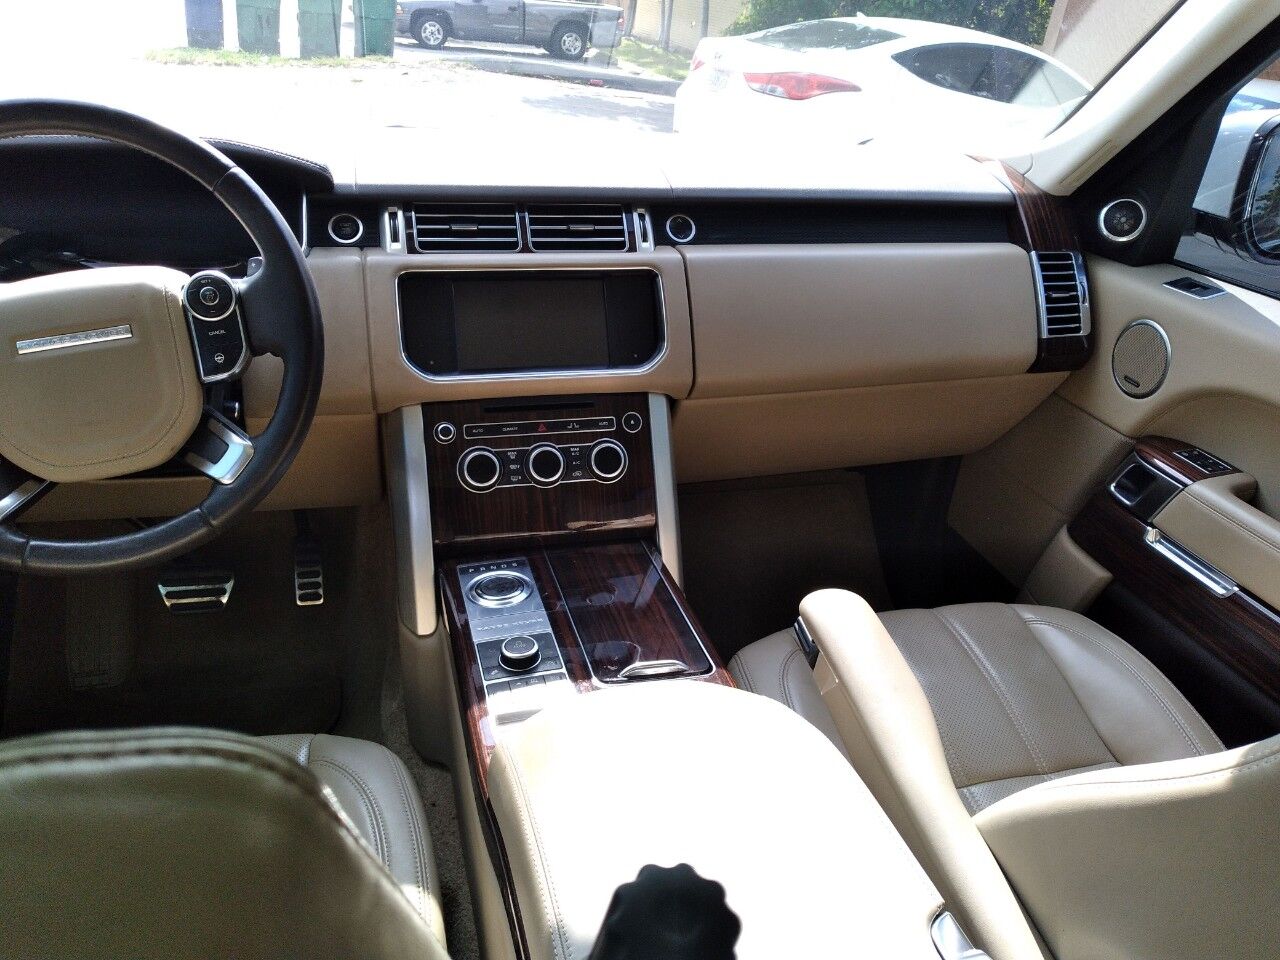 2014 LAND ROVER Range Rover SUV / Crossover - $40,999